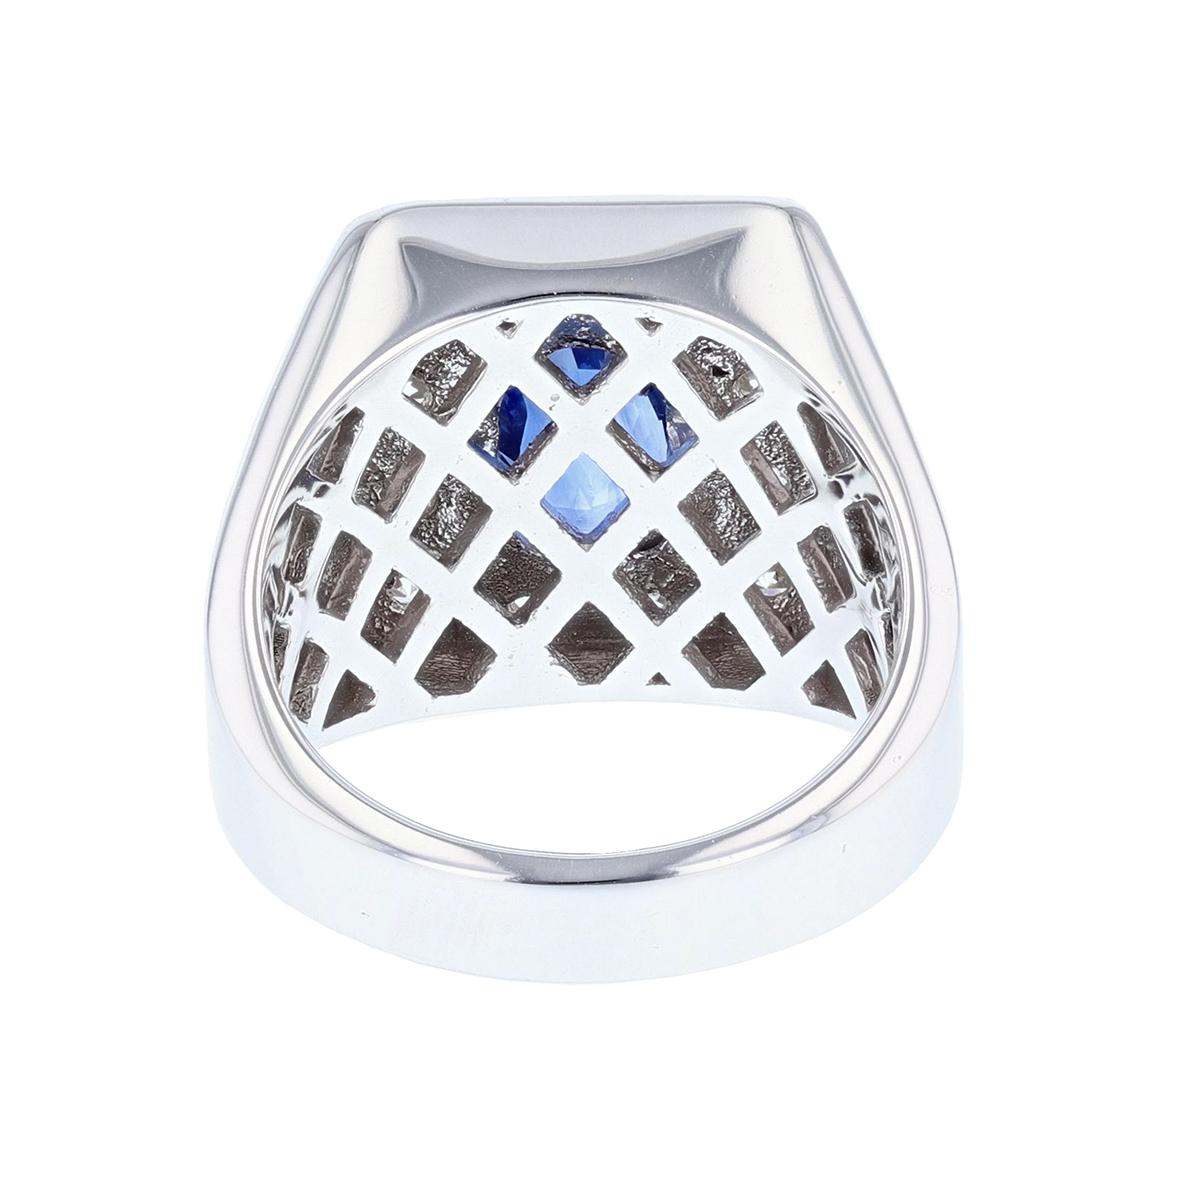 Contemporary Men's GIA Certified 14 Karat Gold 4.05 Carat Oval Sapphire Diamond Ring